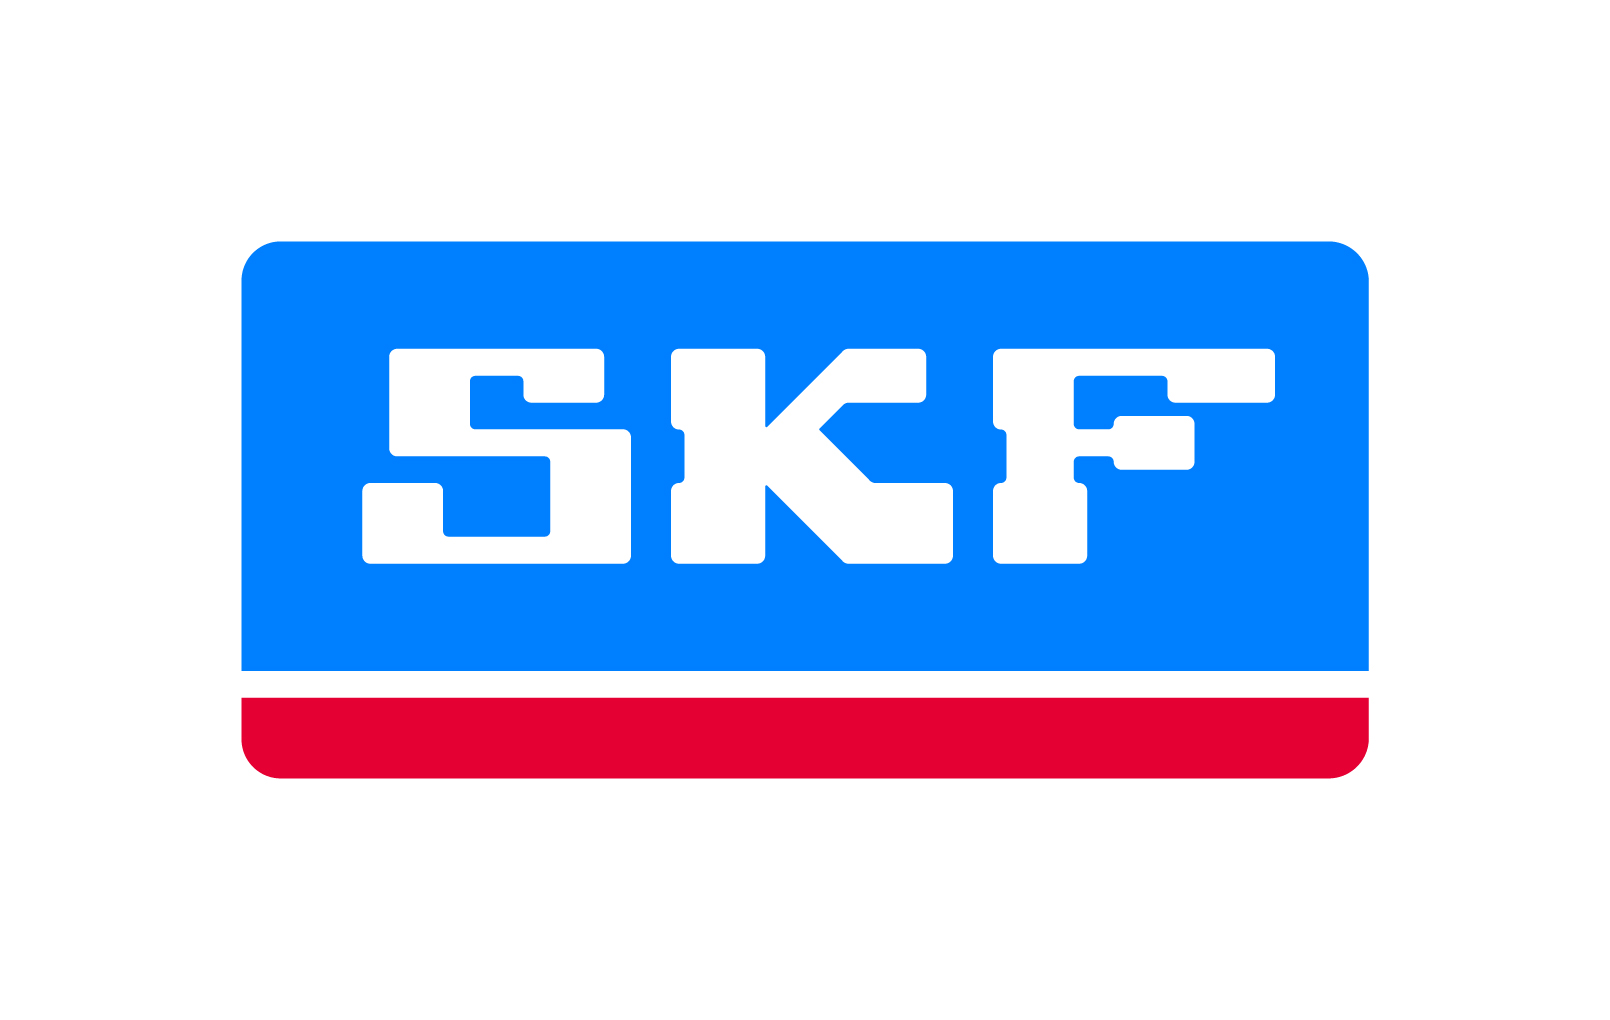 FRHED AUTO - logo SKF